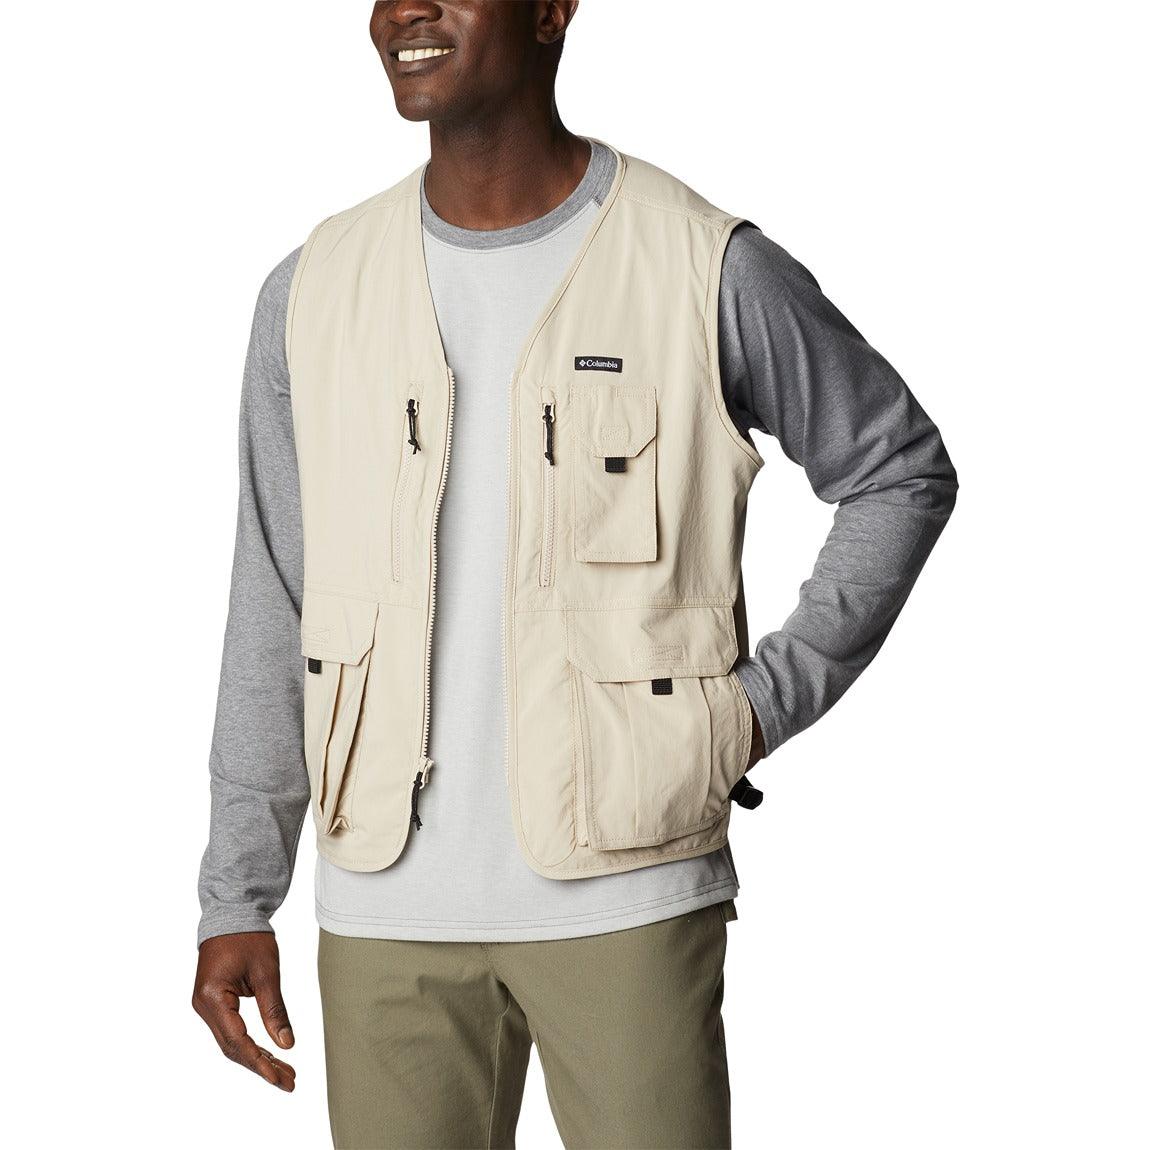 Buy Arssm Men's Utility vest Outdoor Fishing Travel Safari Photo Cargo Vest  for Men, Black, Medium at Amazon.in